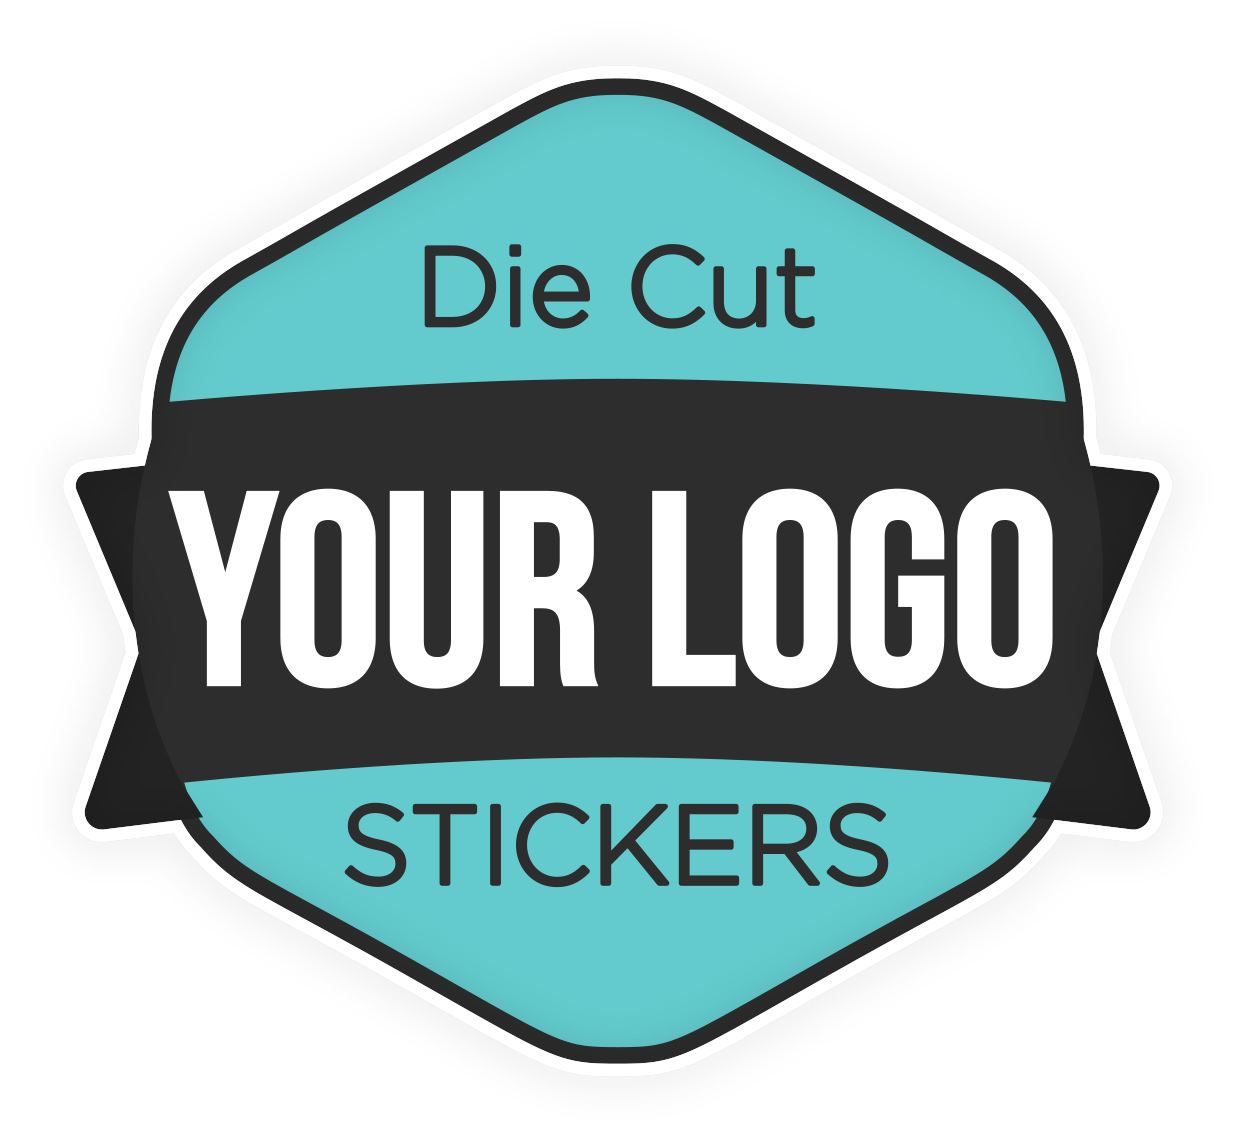 Die Cut Stickers: Make Your Own Die Cut Stickers